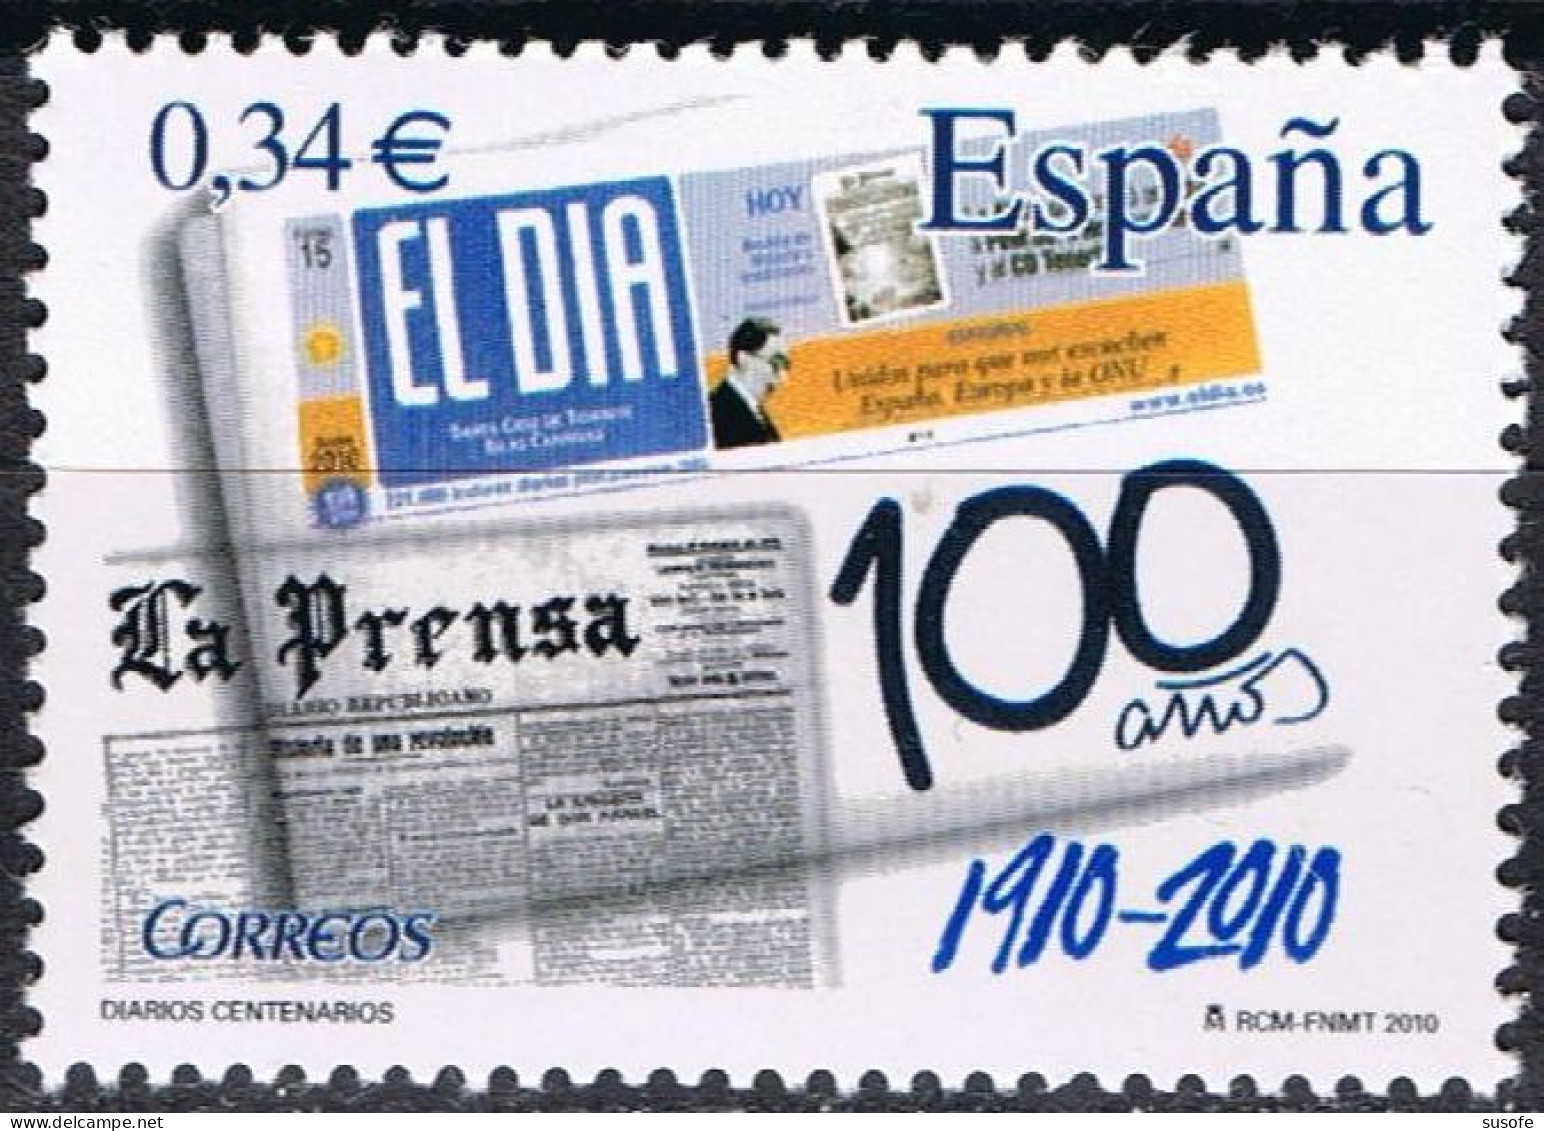 España 2010 Edifil 4604 Sello ** Diarios Centenarios El Dia (1910-2010) Tenerife Michel 4551 Yvert 4256 Spain Stamp - Unused Stamps